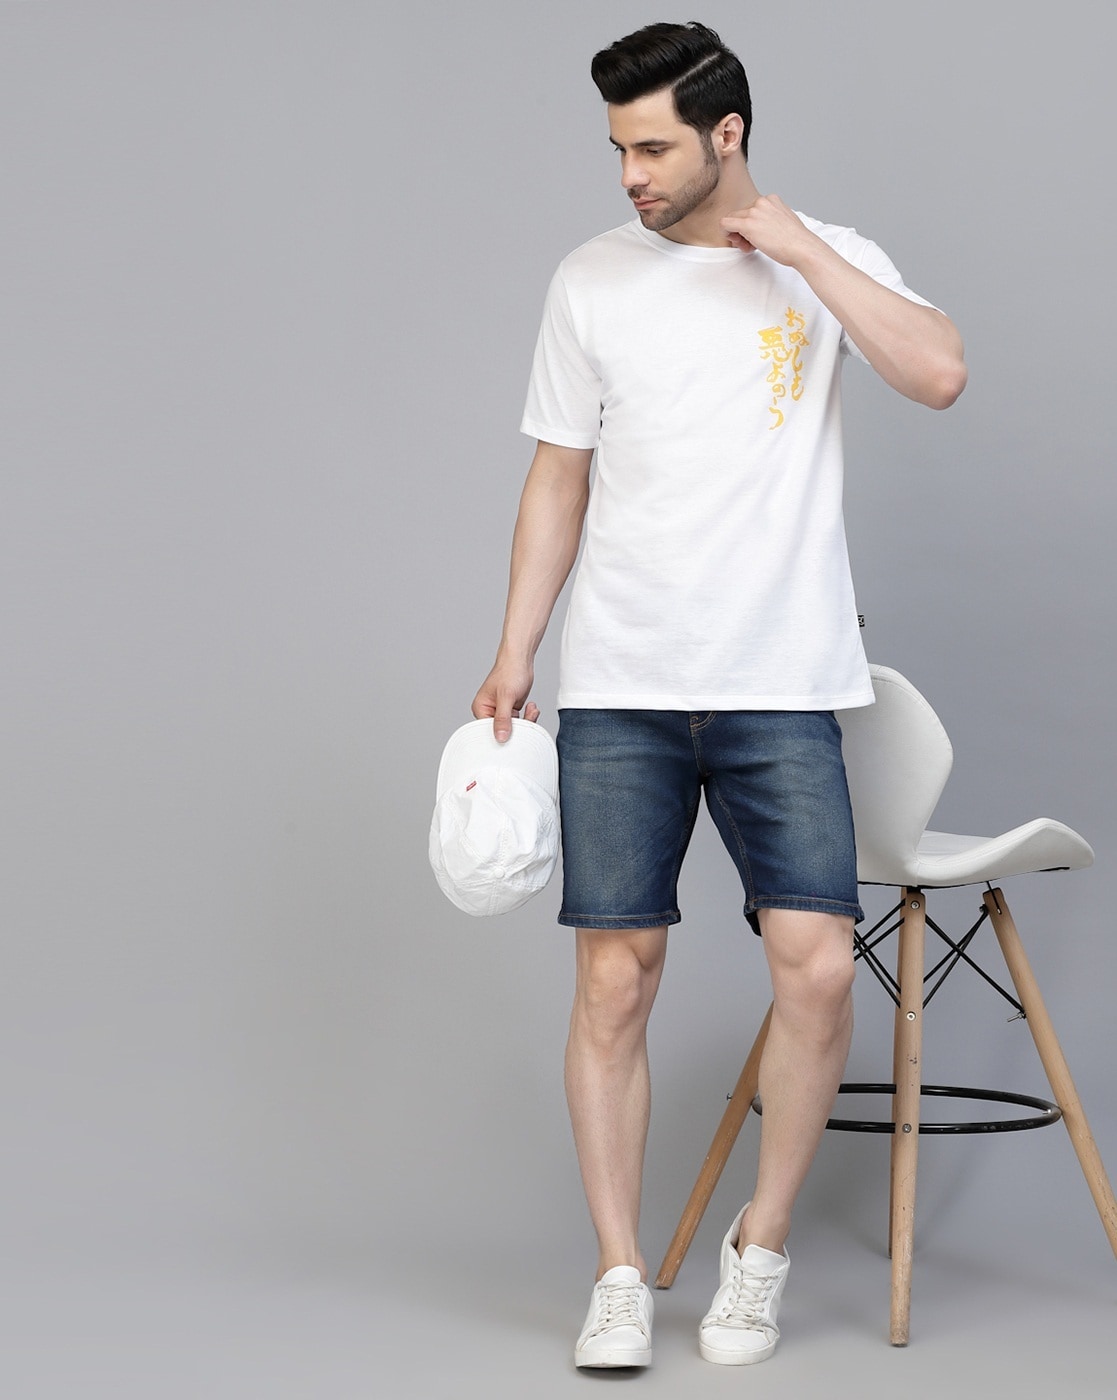 Buy White Tshirts for Men by RIGO Online